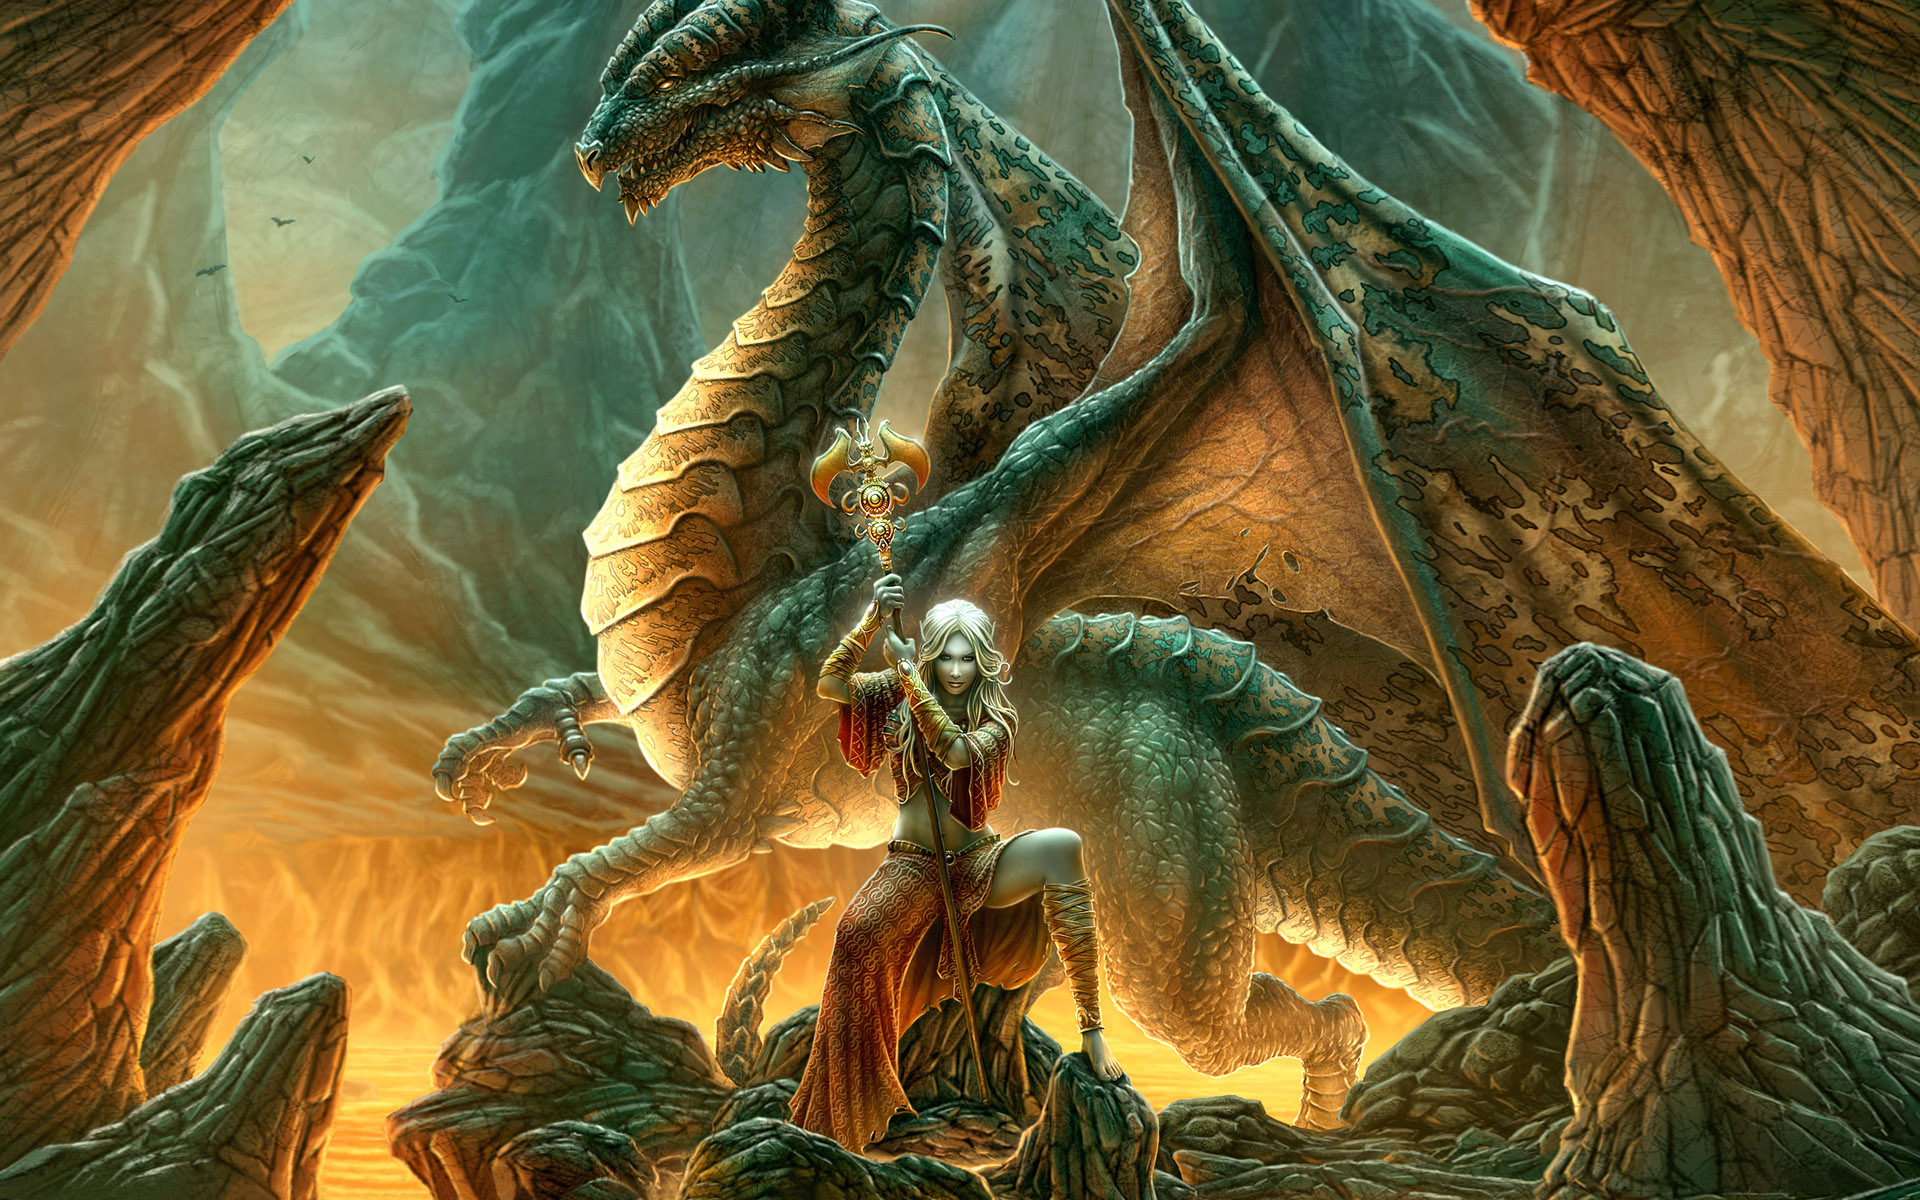 Desktop Wallpaper Of Fantasy Warrior Princess And Dragon